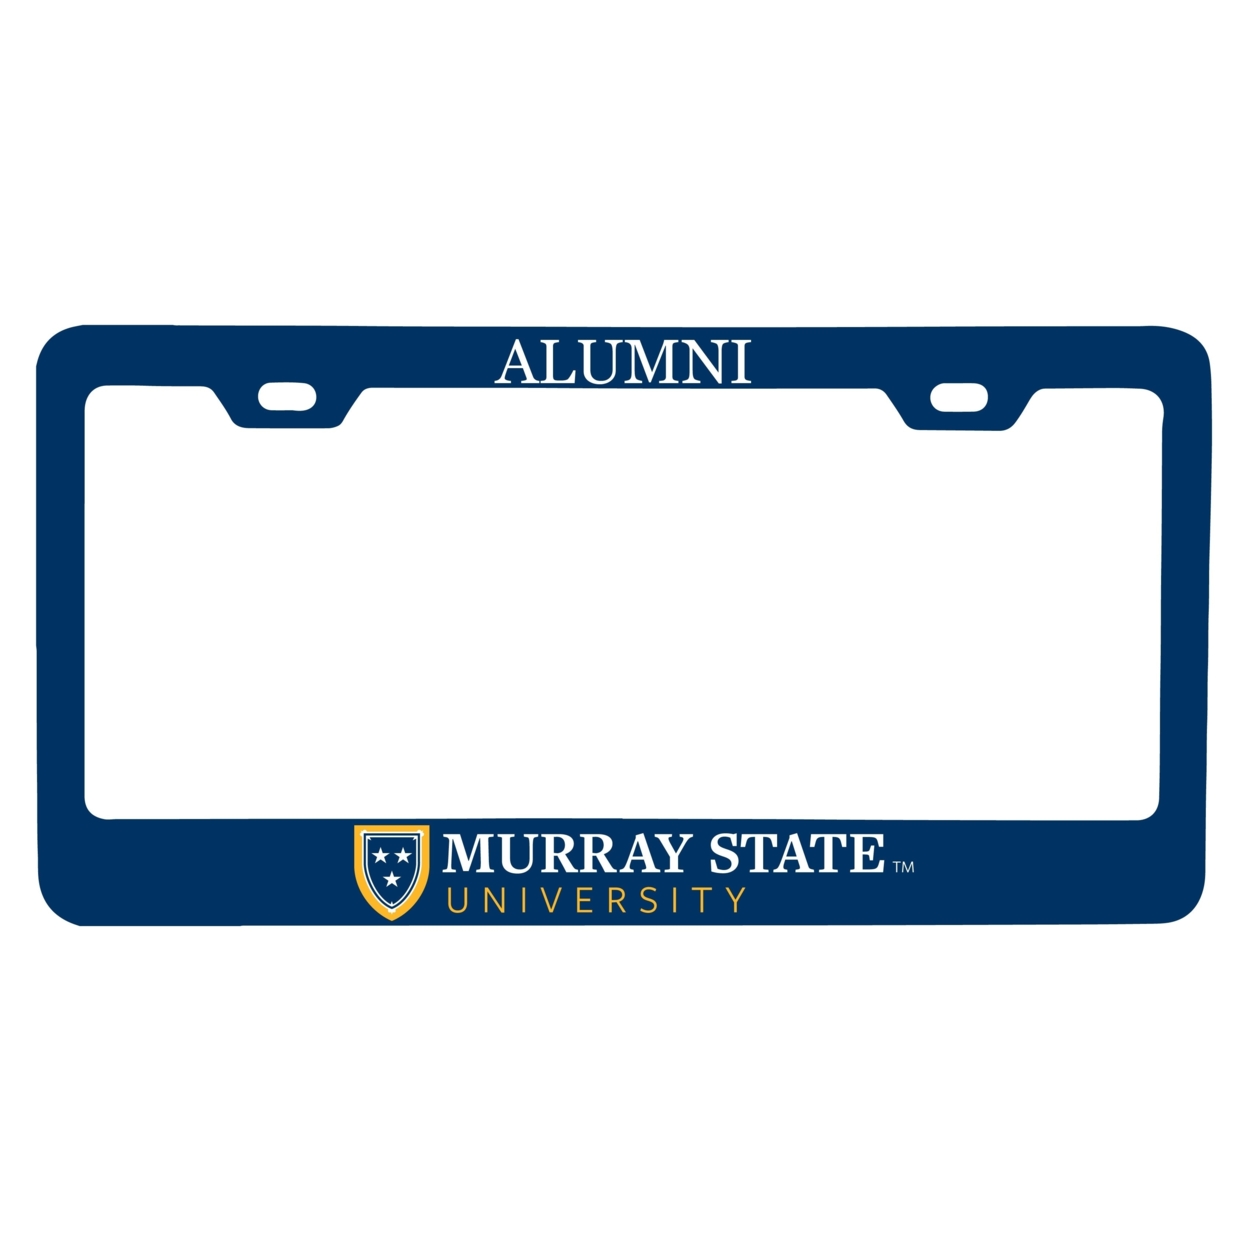 Murray State University Alumni License Plate Frame